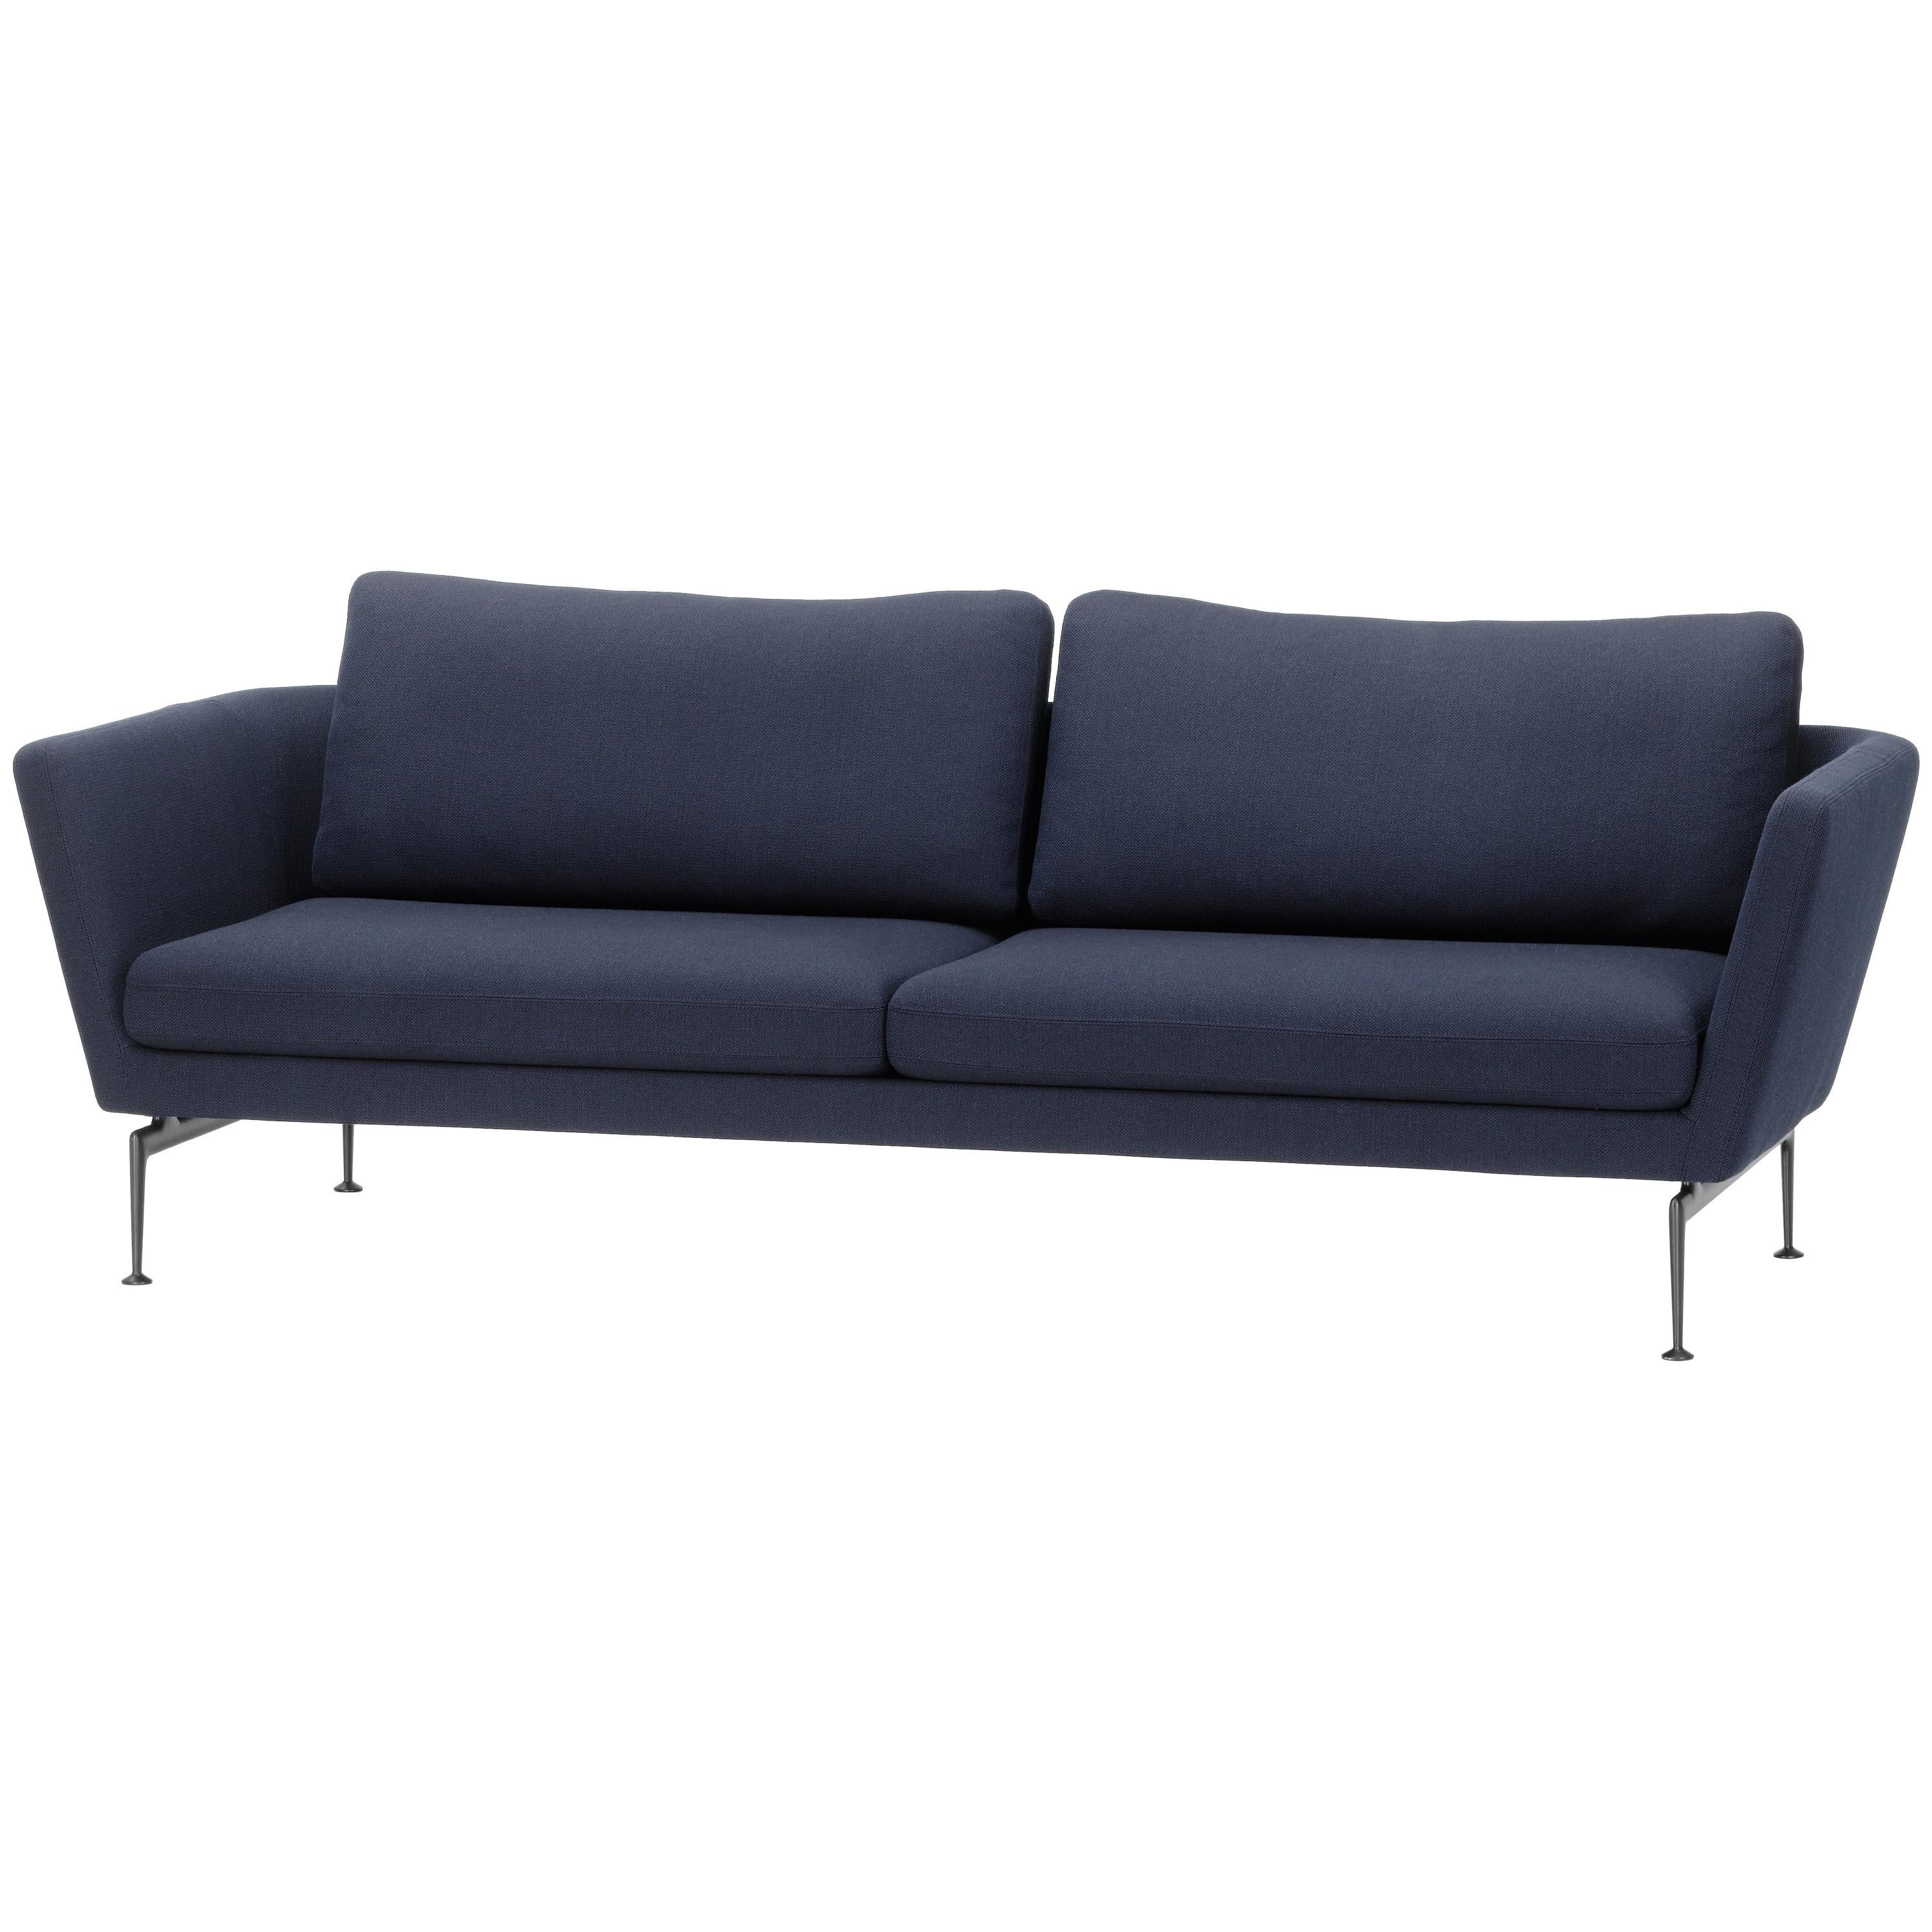 Vitra Suita Sofa Three-Seat in Dark Blue Iroko by Antonio Citterio For Sale